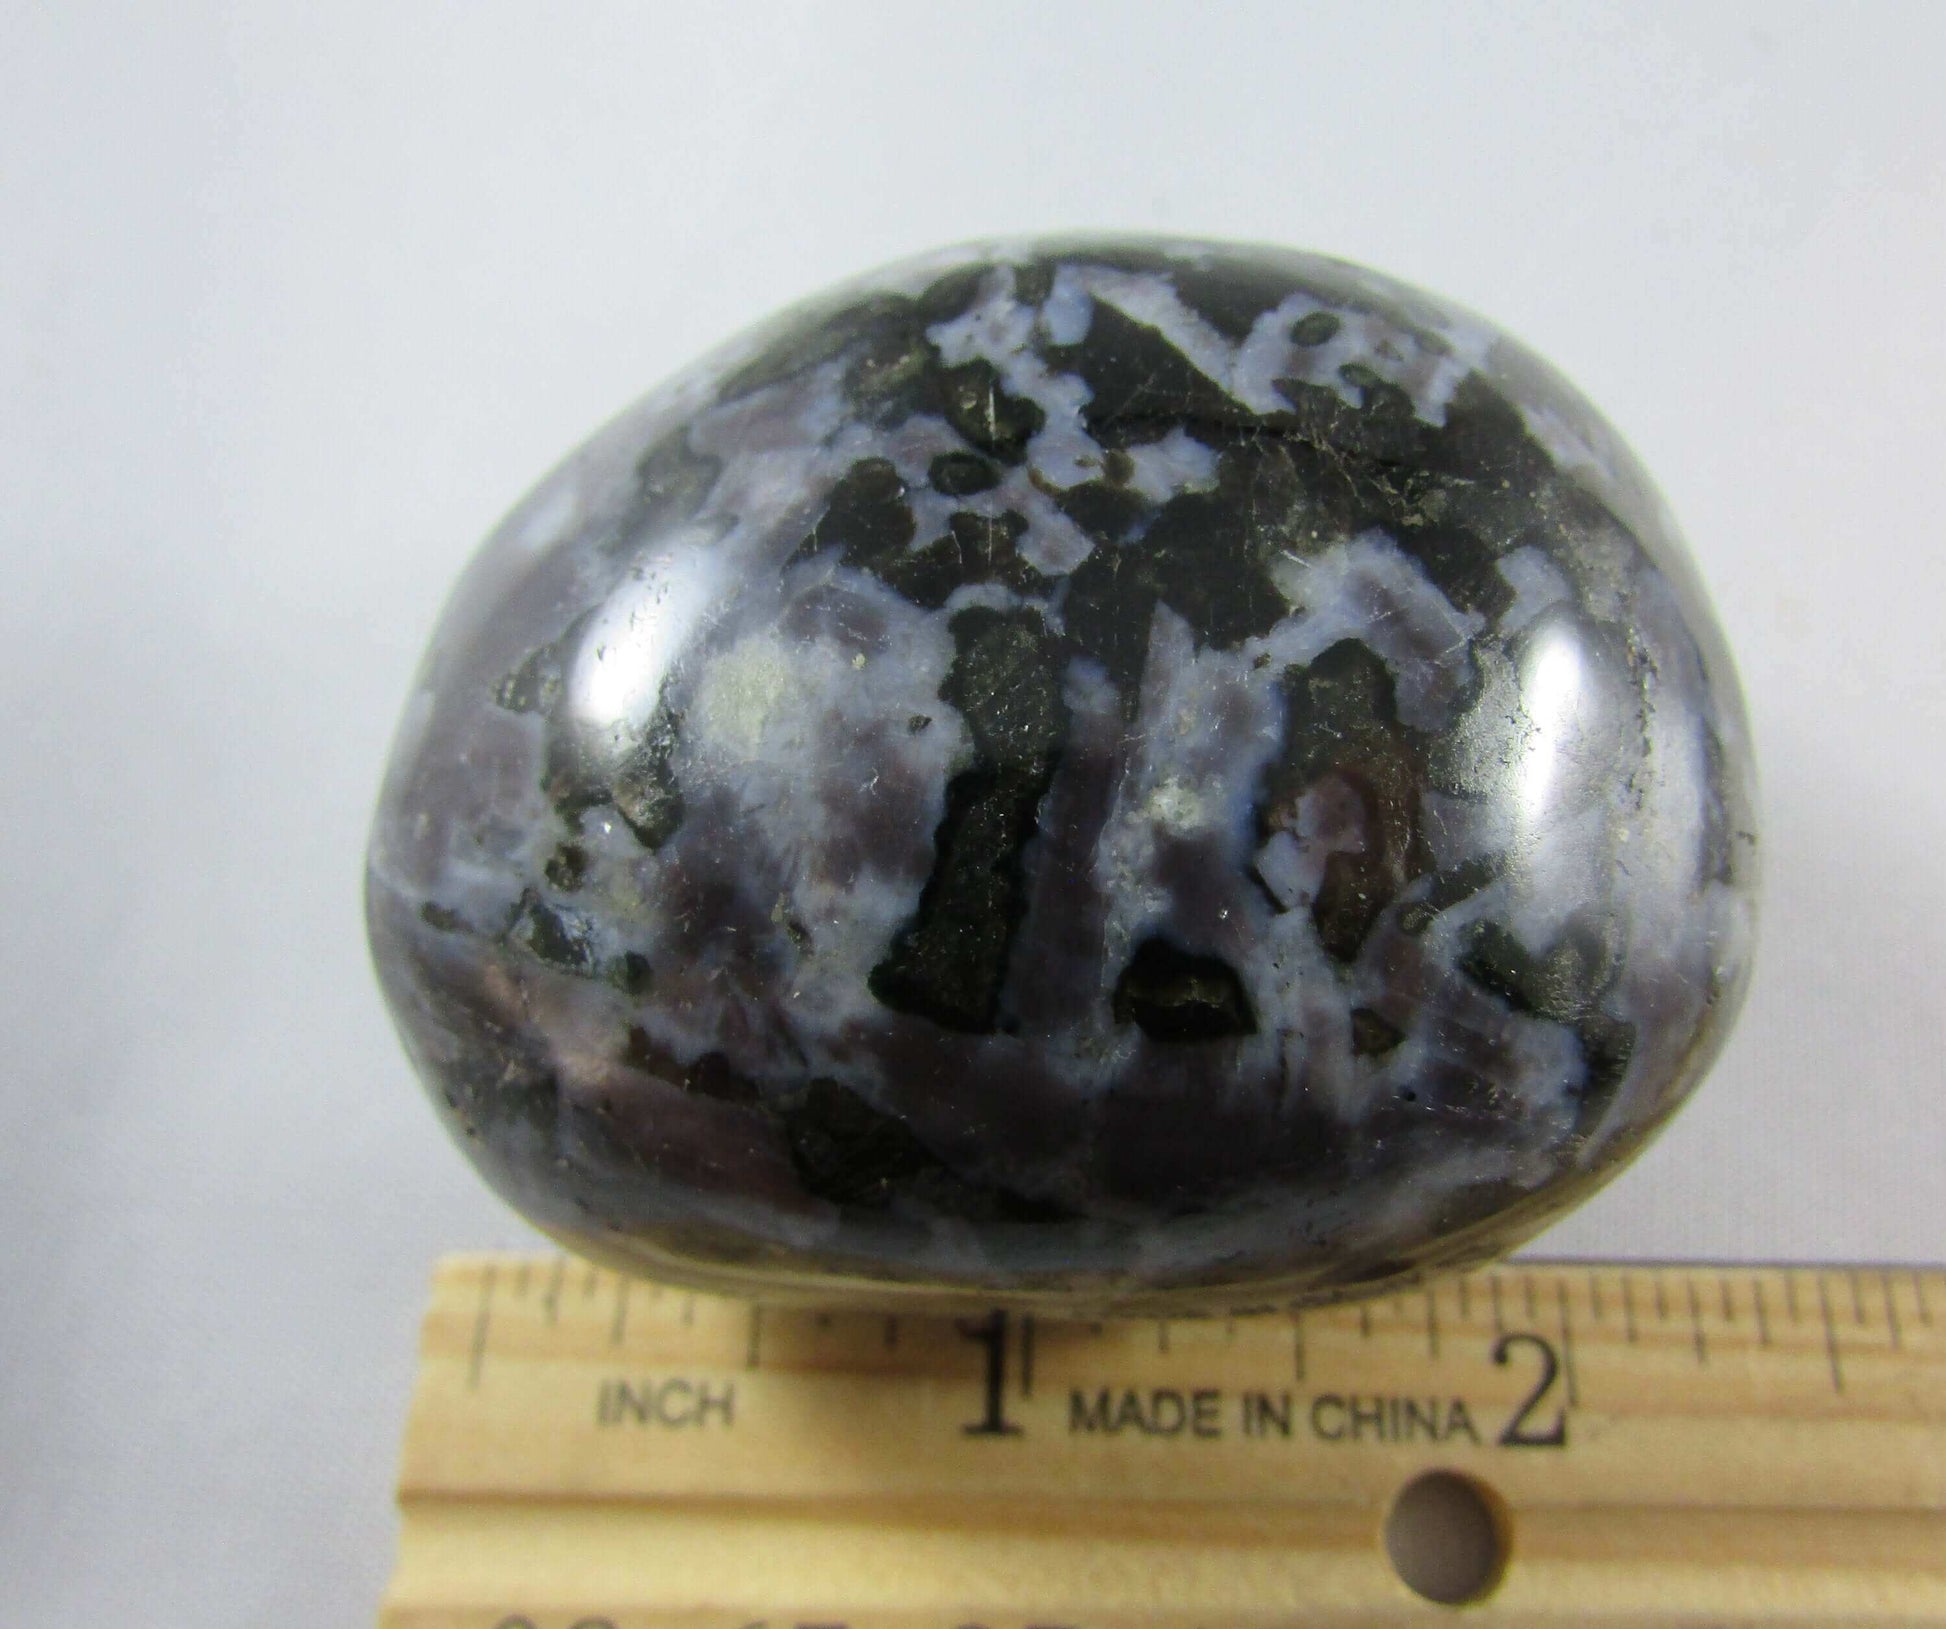 Mystic Merlinite Palmstone, Blue Black Indigo Gabbro, Ethically Sourced from Madagascar